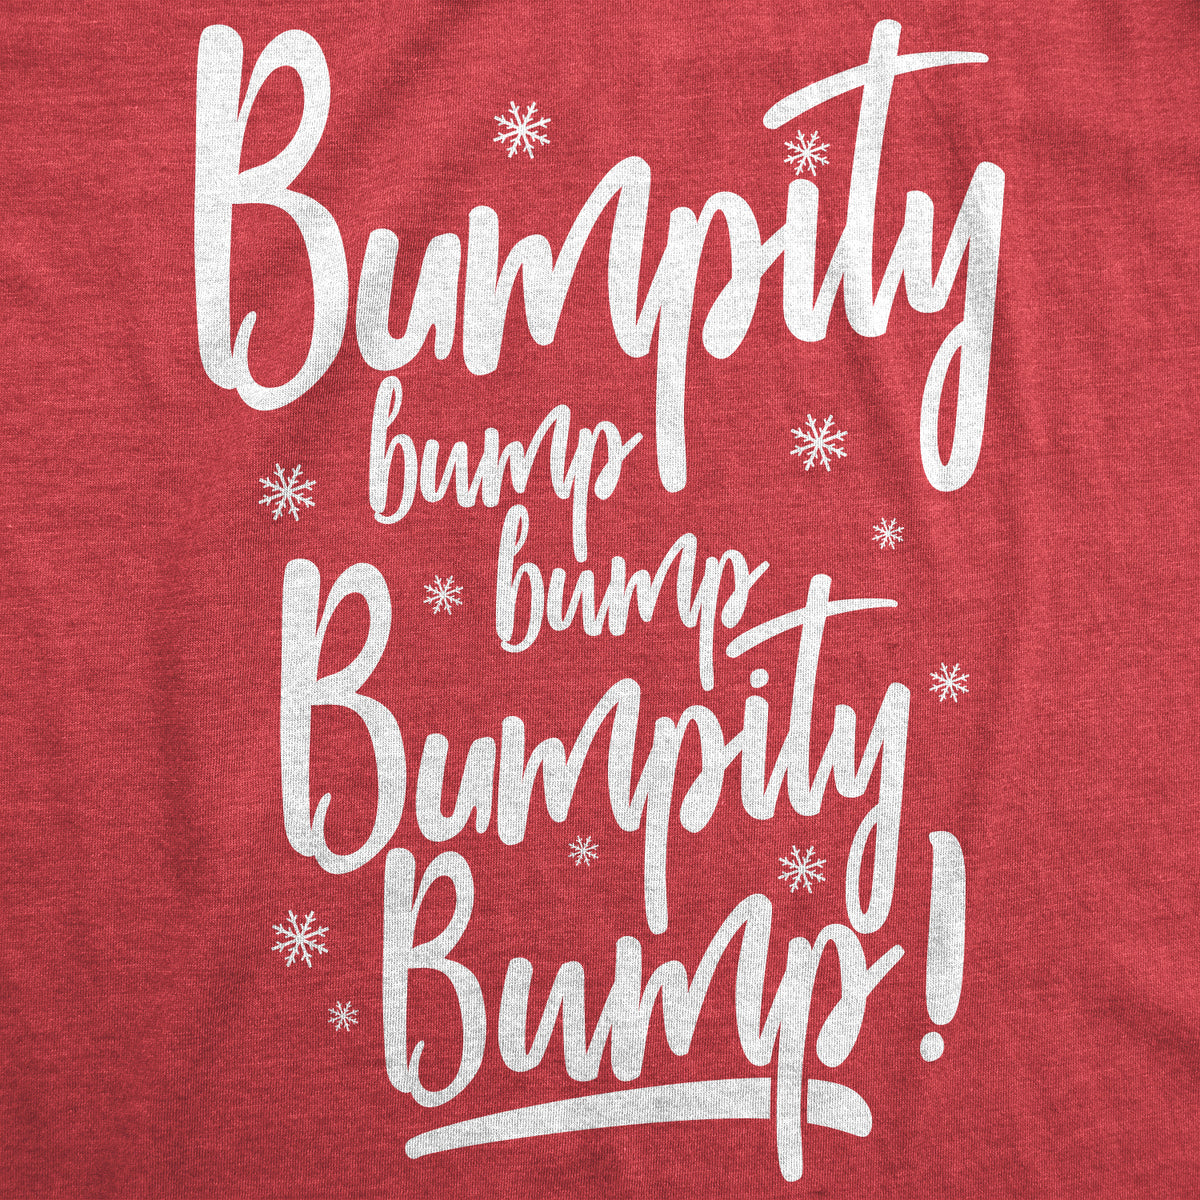 Bumpity Bump Bump Maternity T Shirt